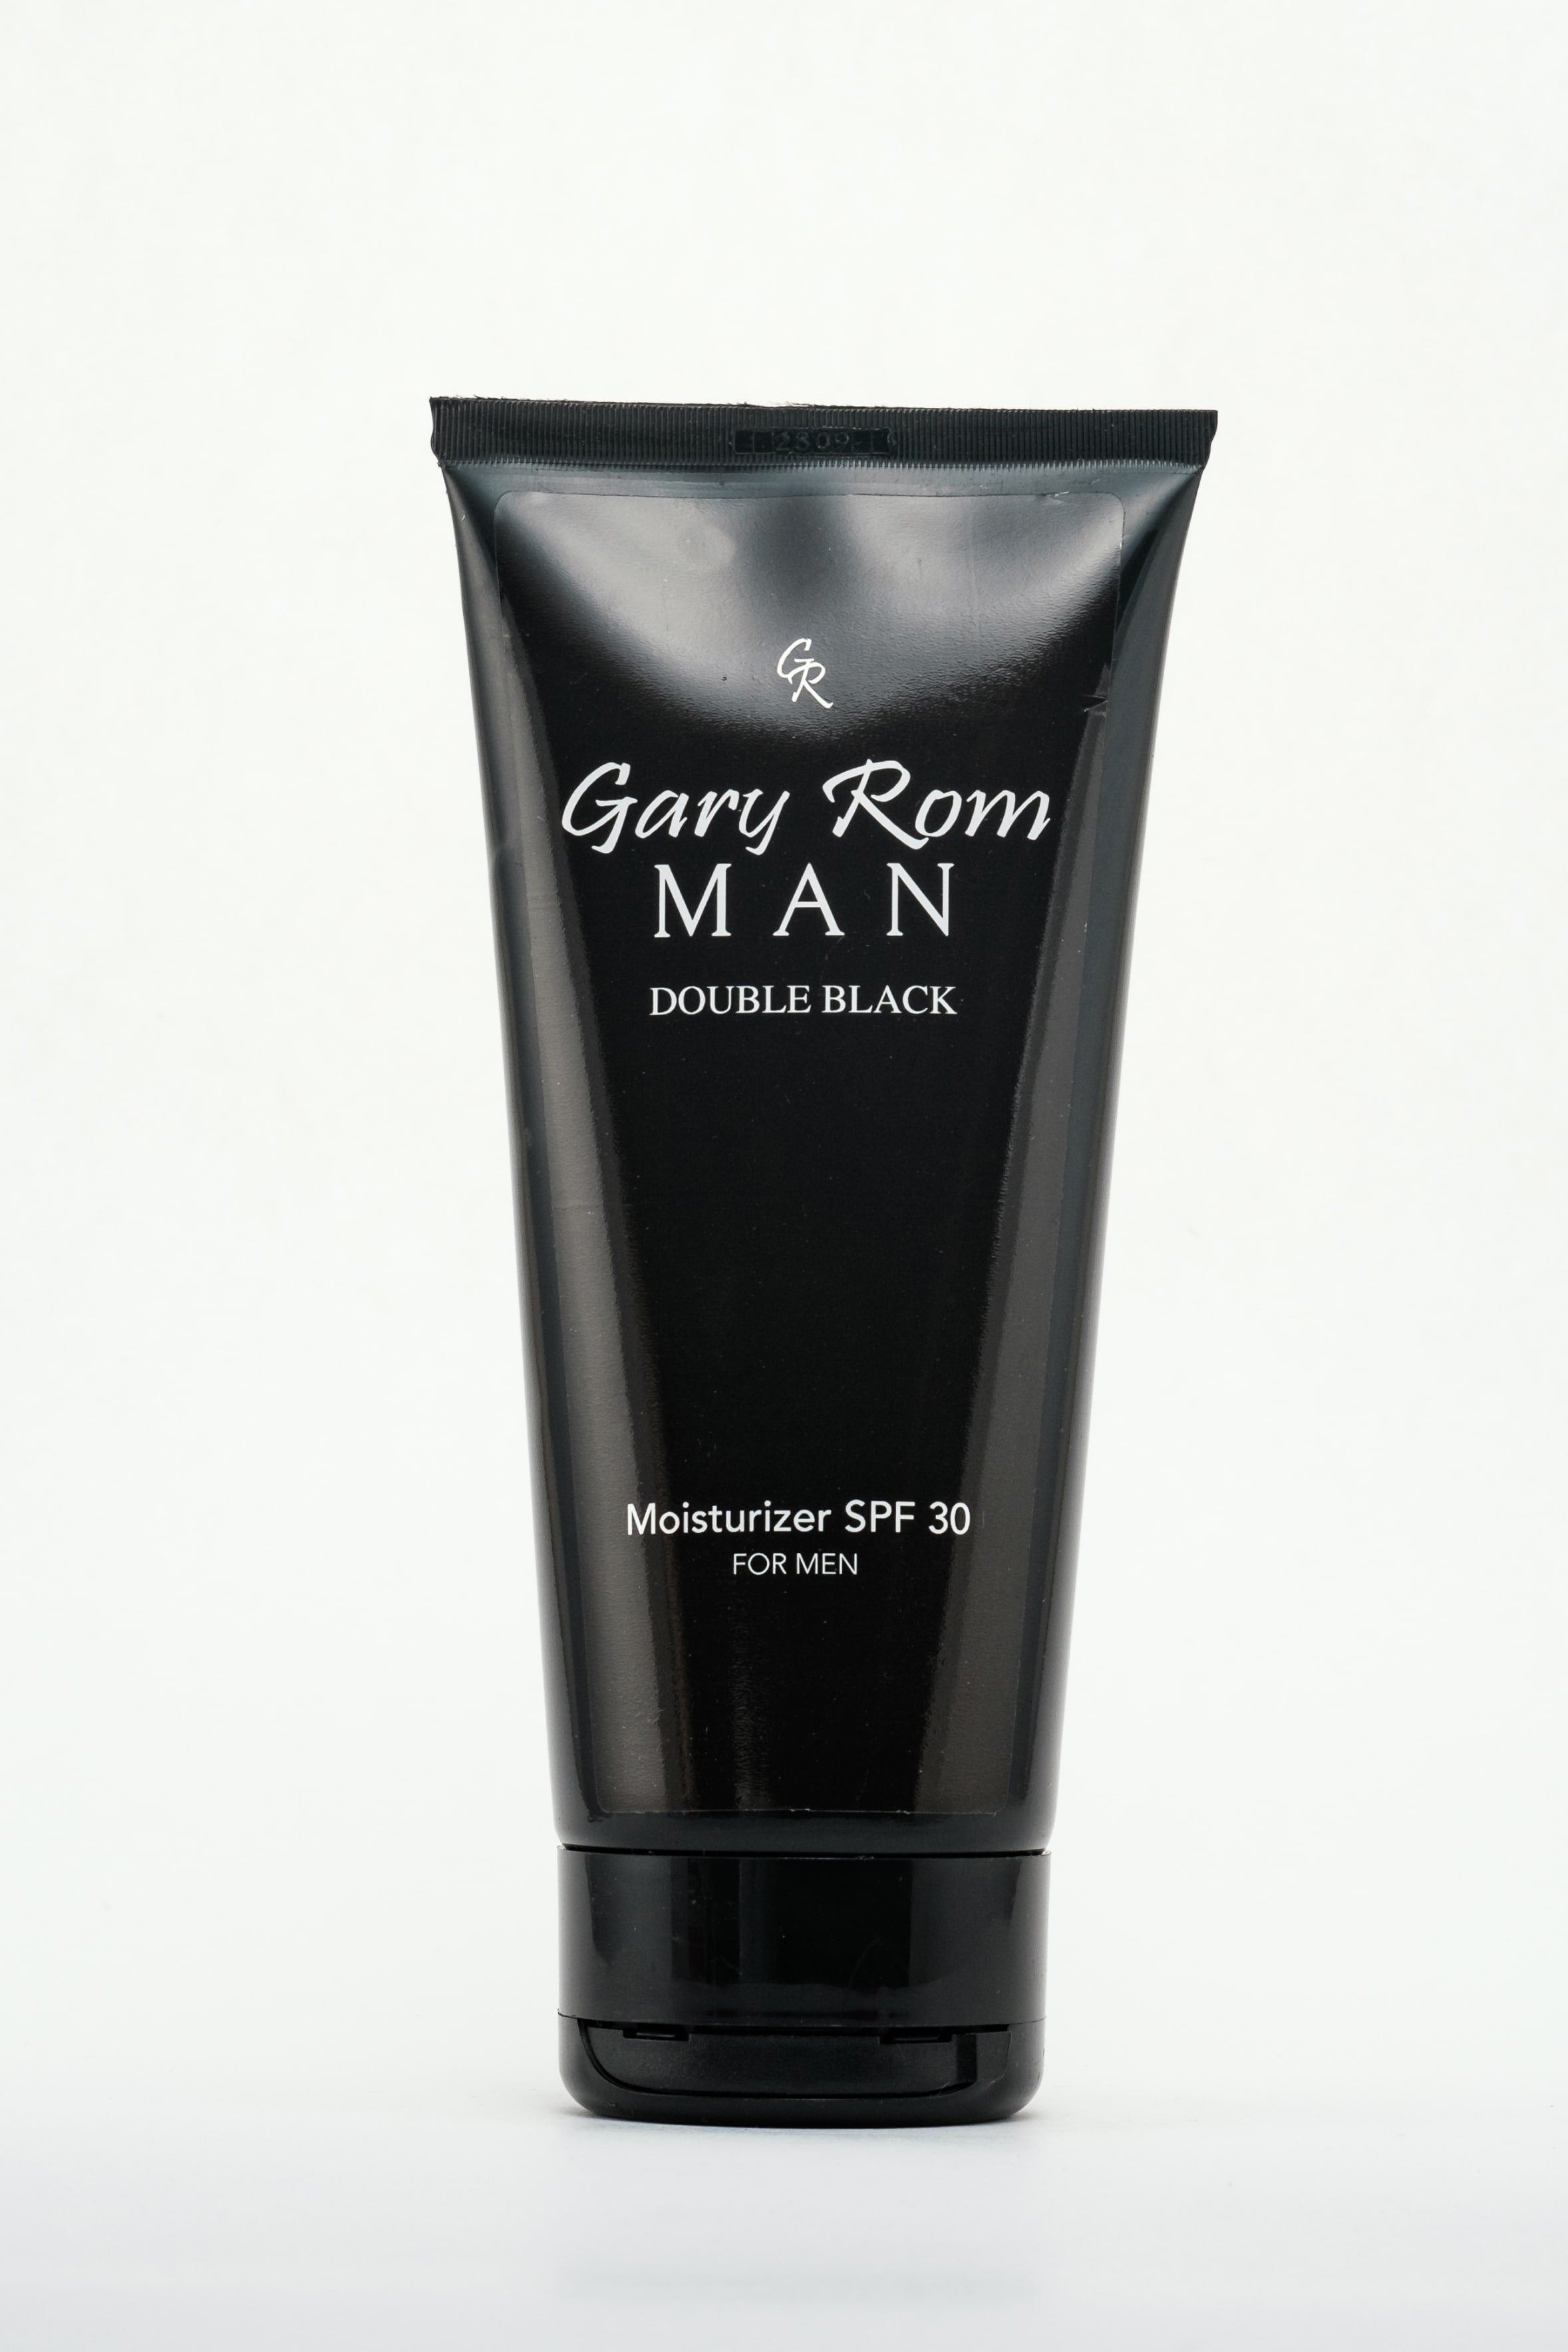 Gary Rom Man Double Black Moisturiser